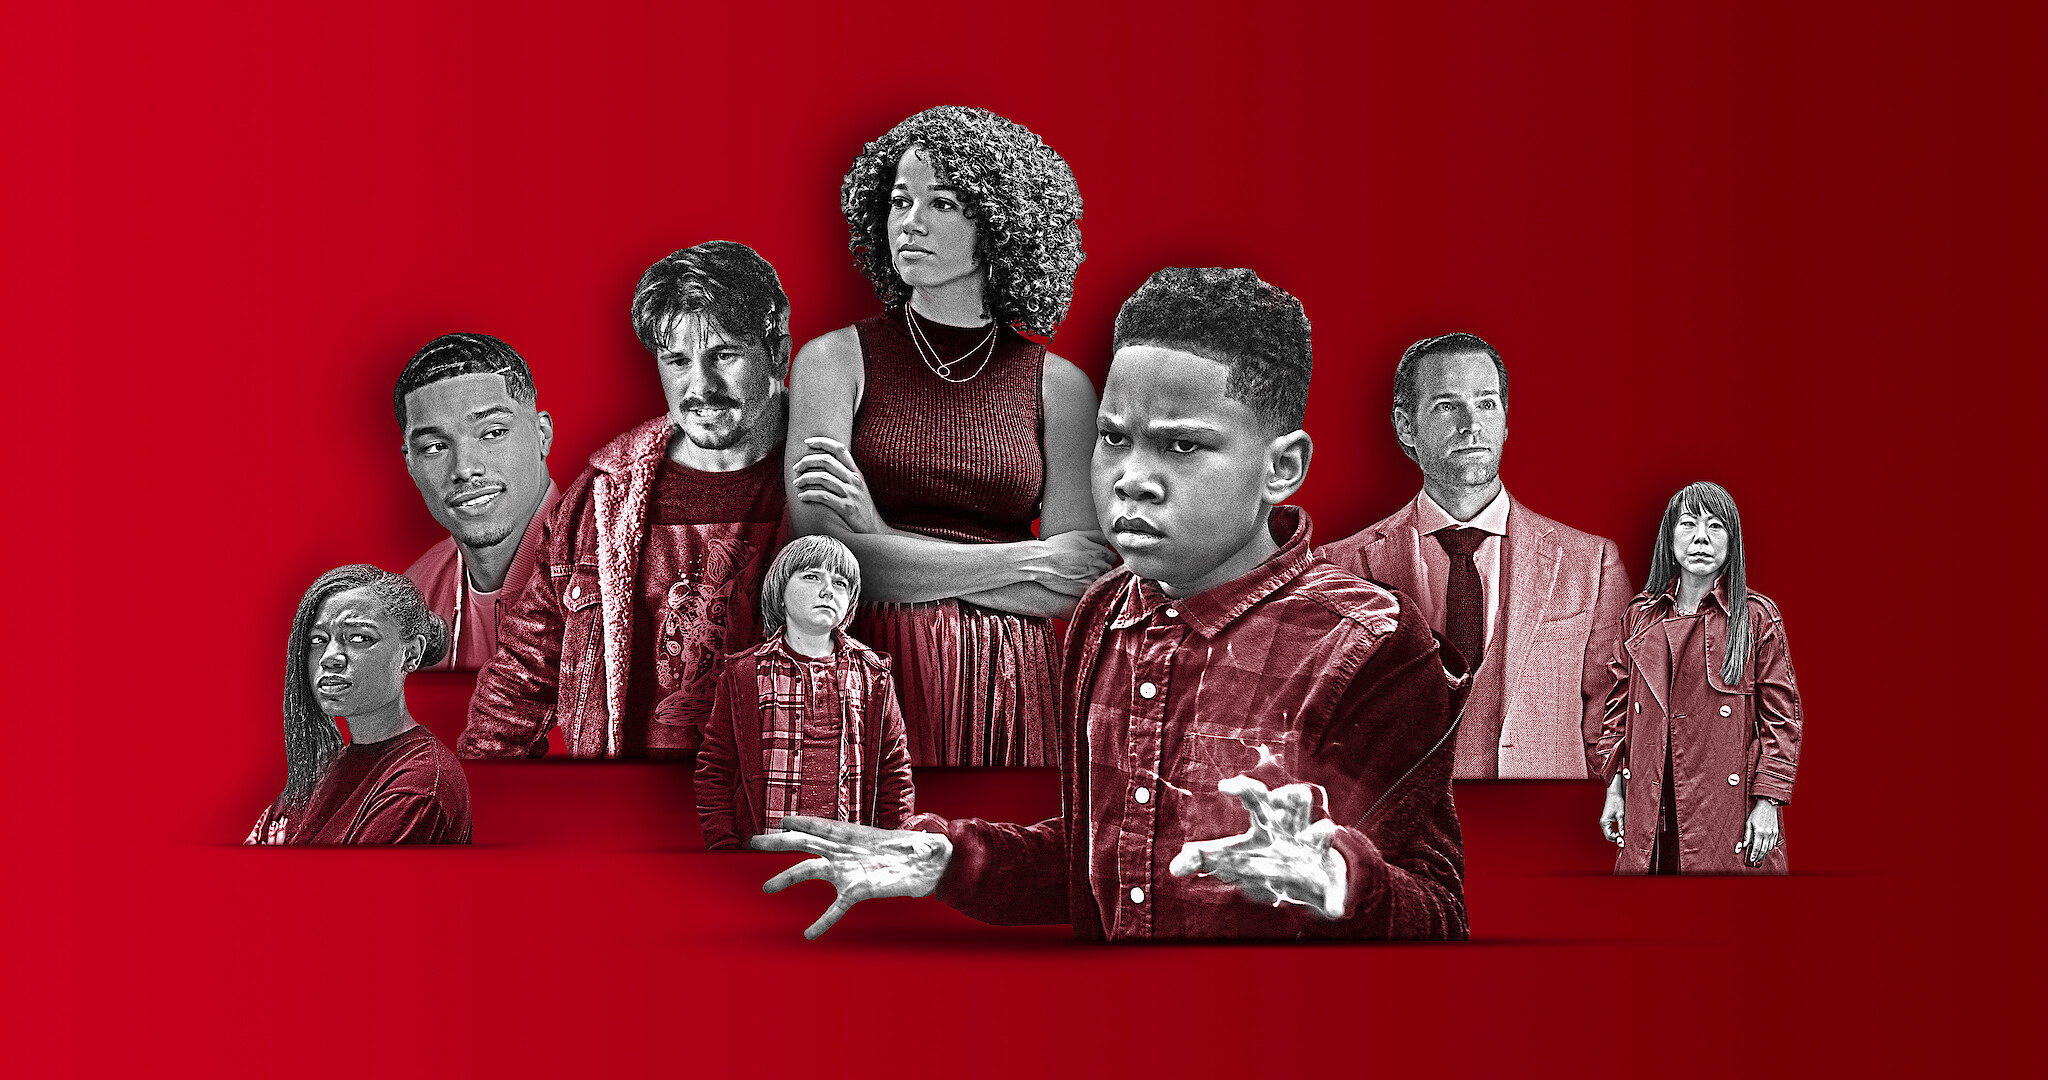 Meet the Cast of 'Raising Dion' Season 2 - Netflix Tudum